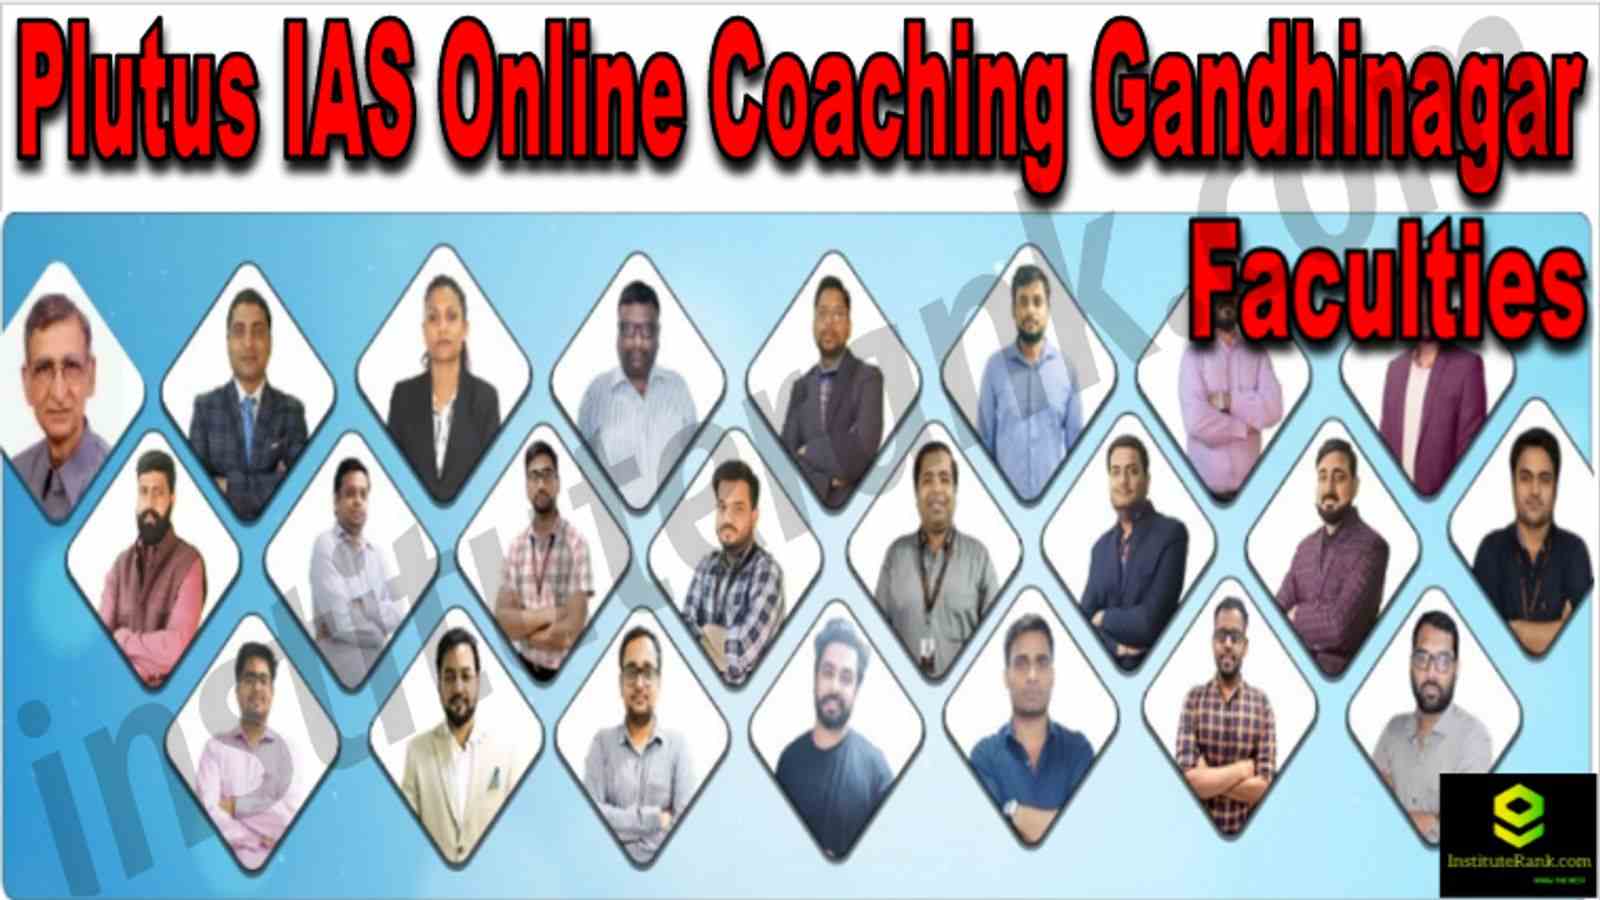 Plutus IAS Online Coaching Gandhinagar Reviews Faculties